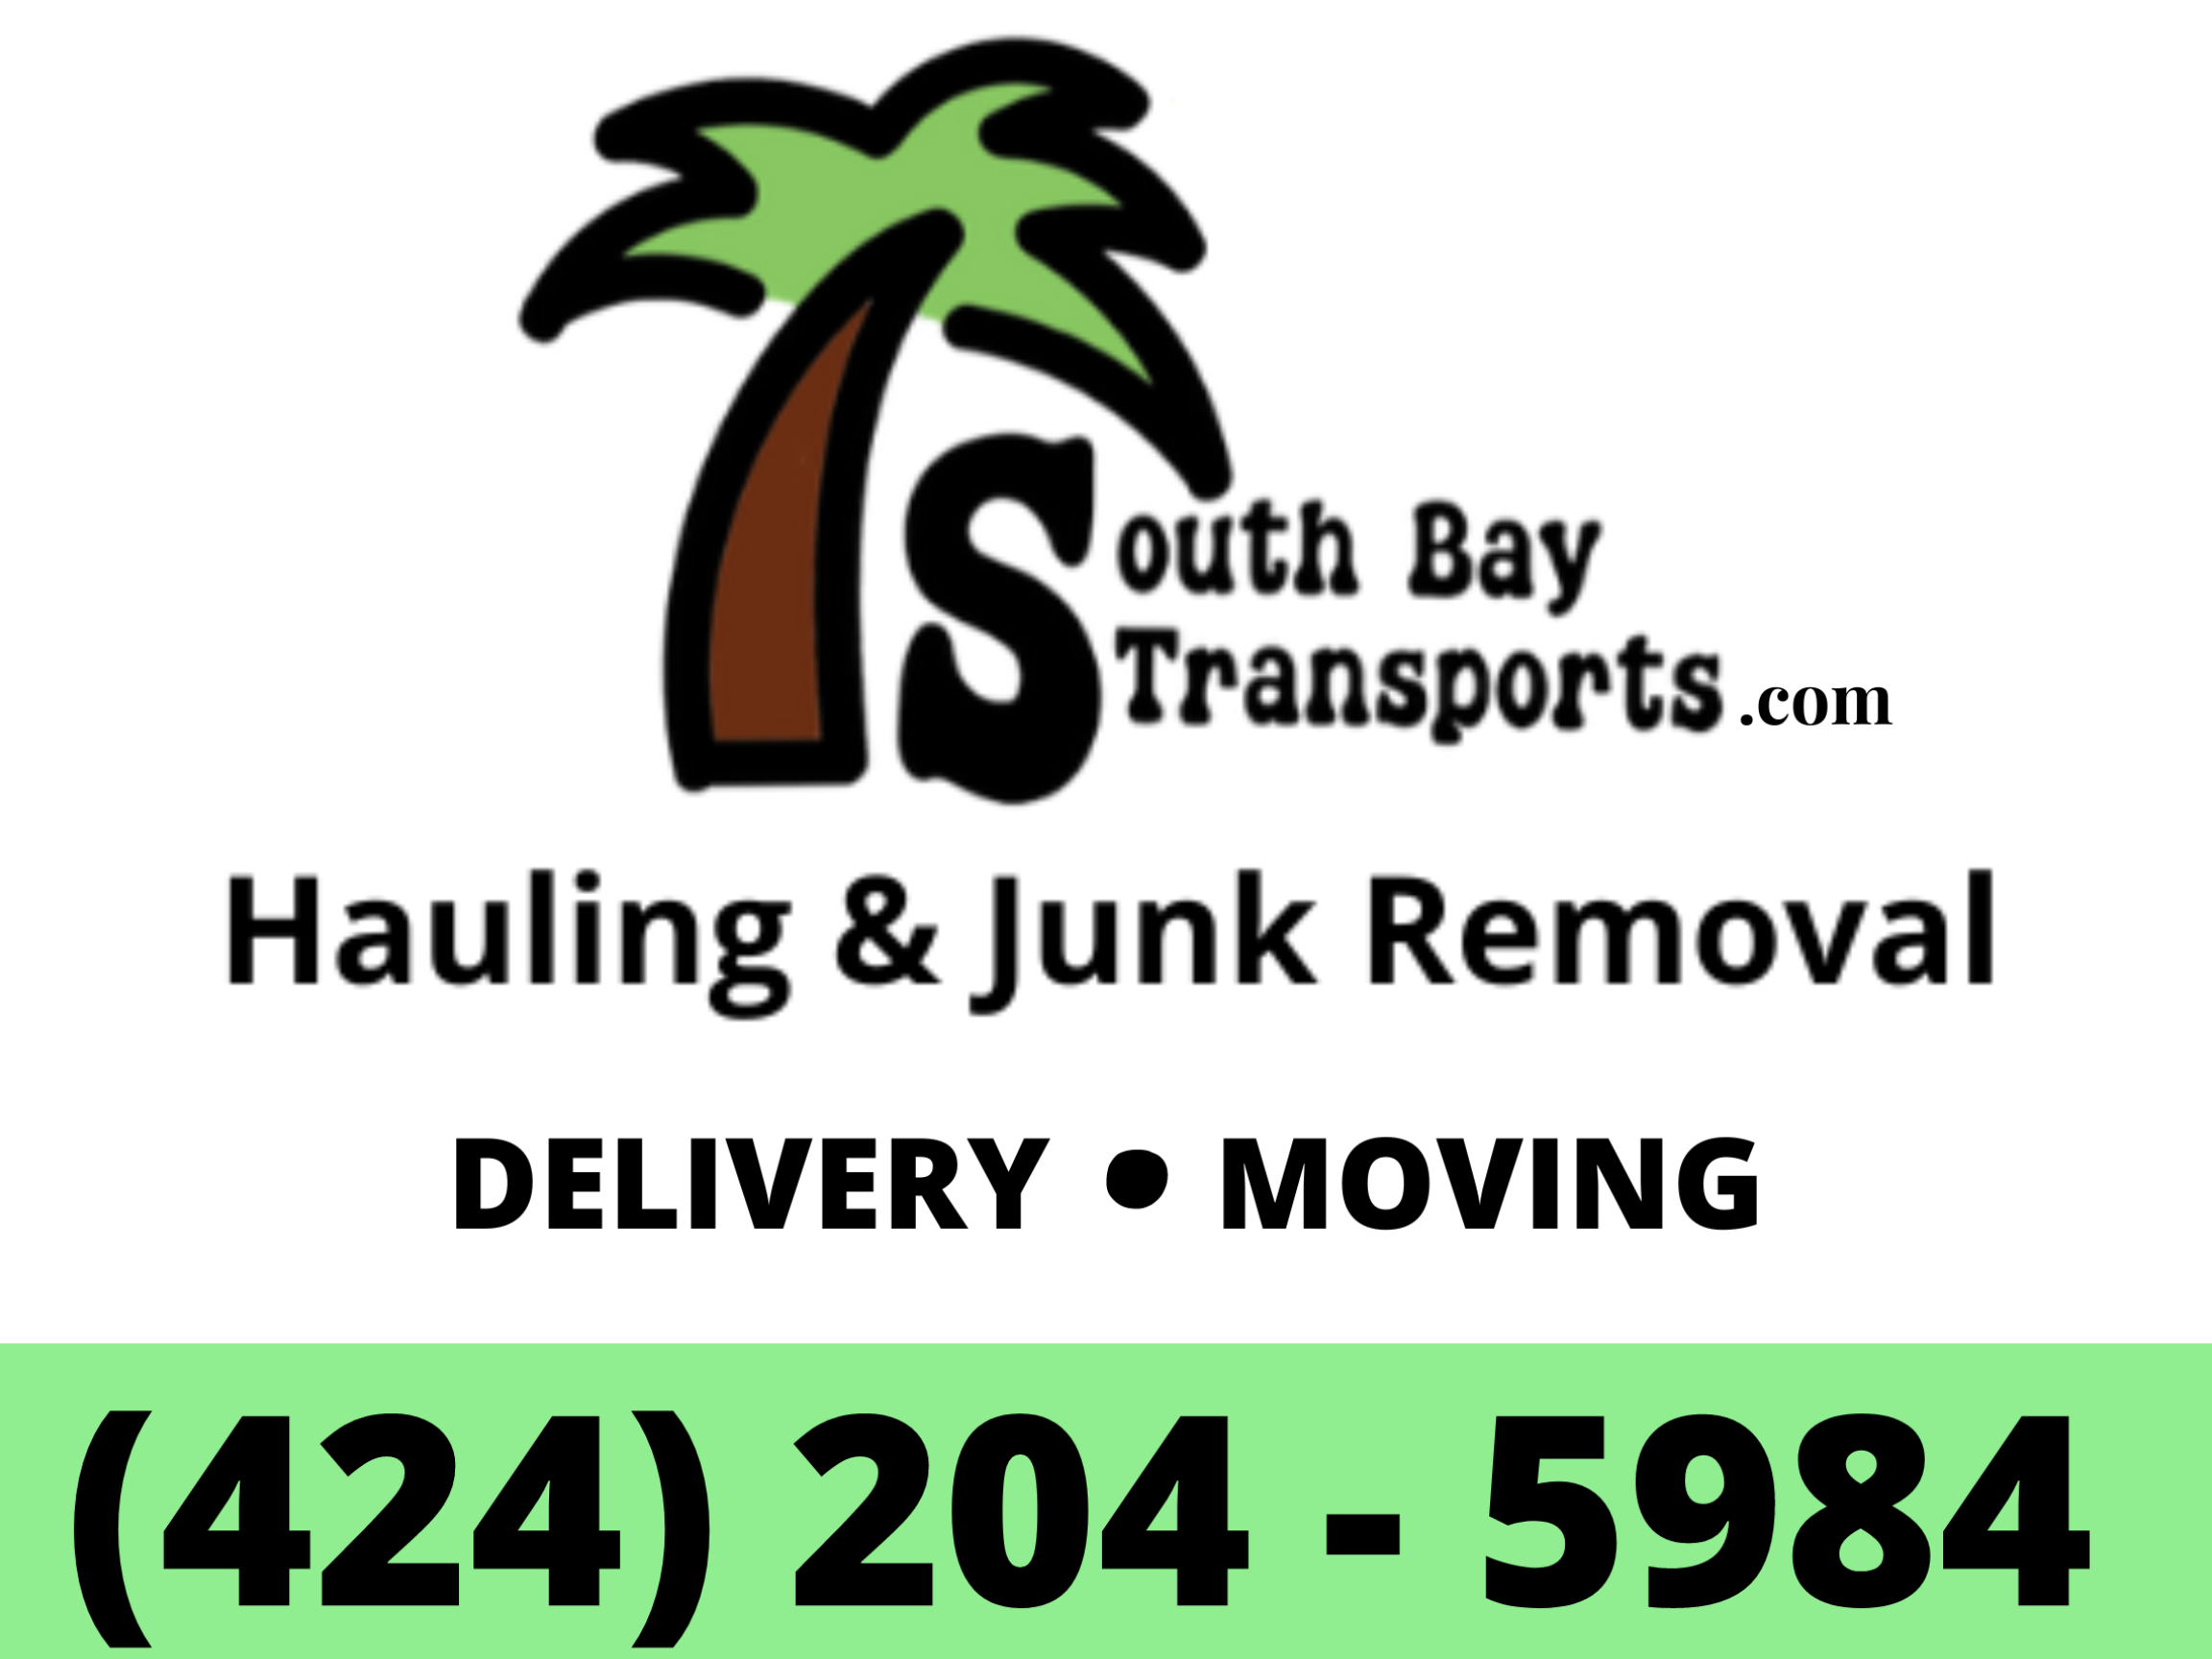 South Bay Transports Logo